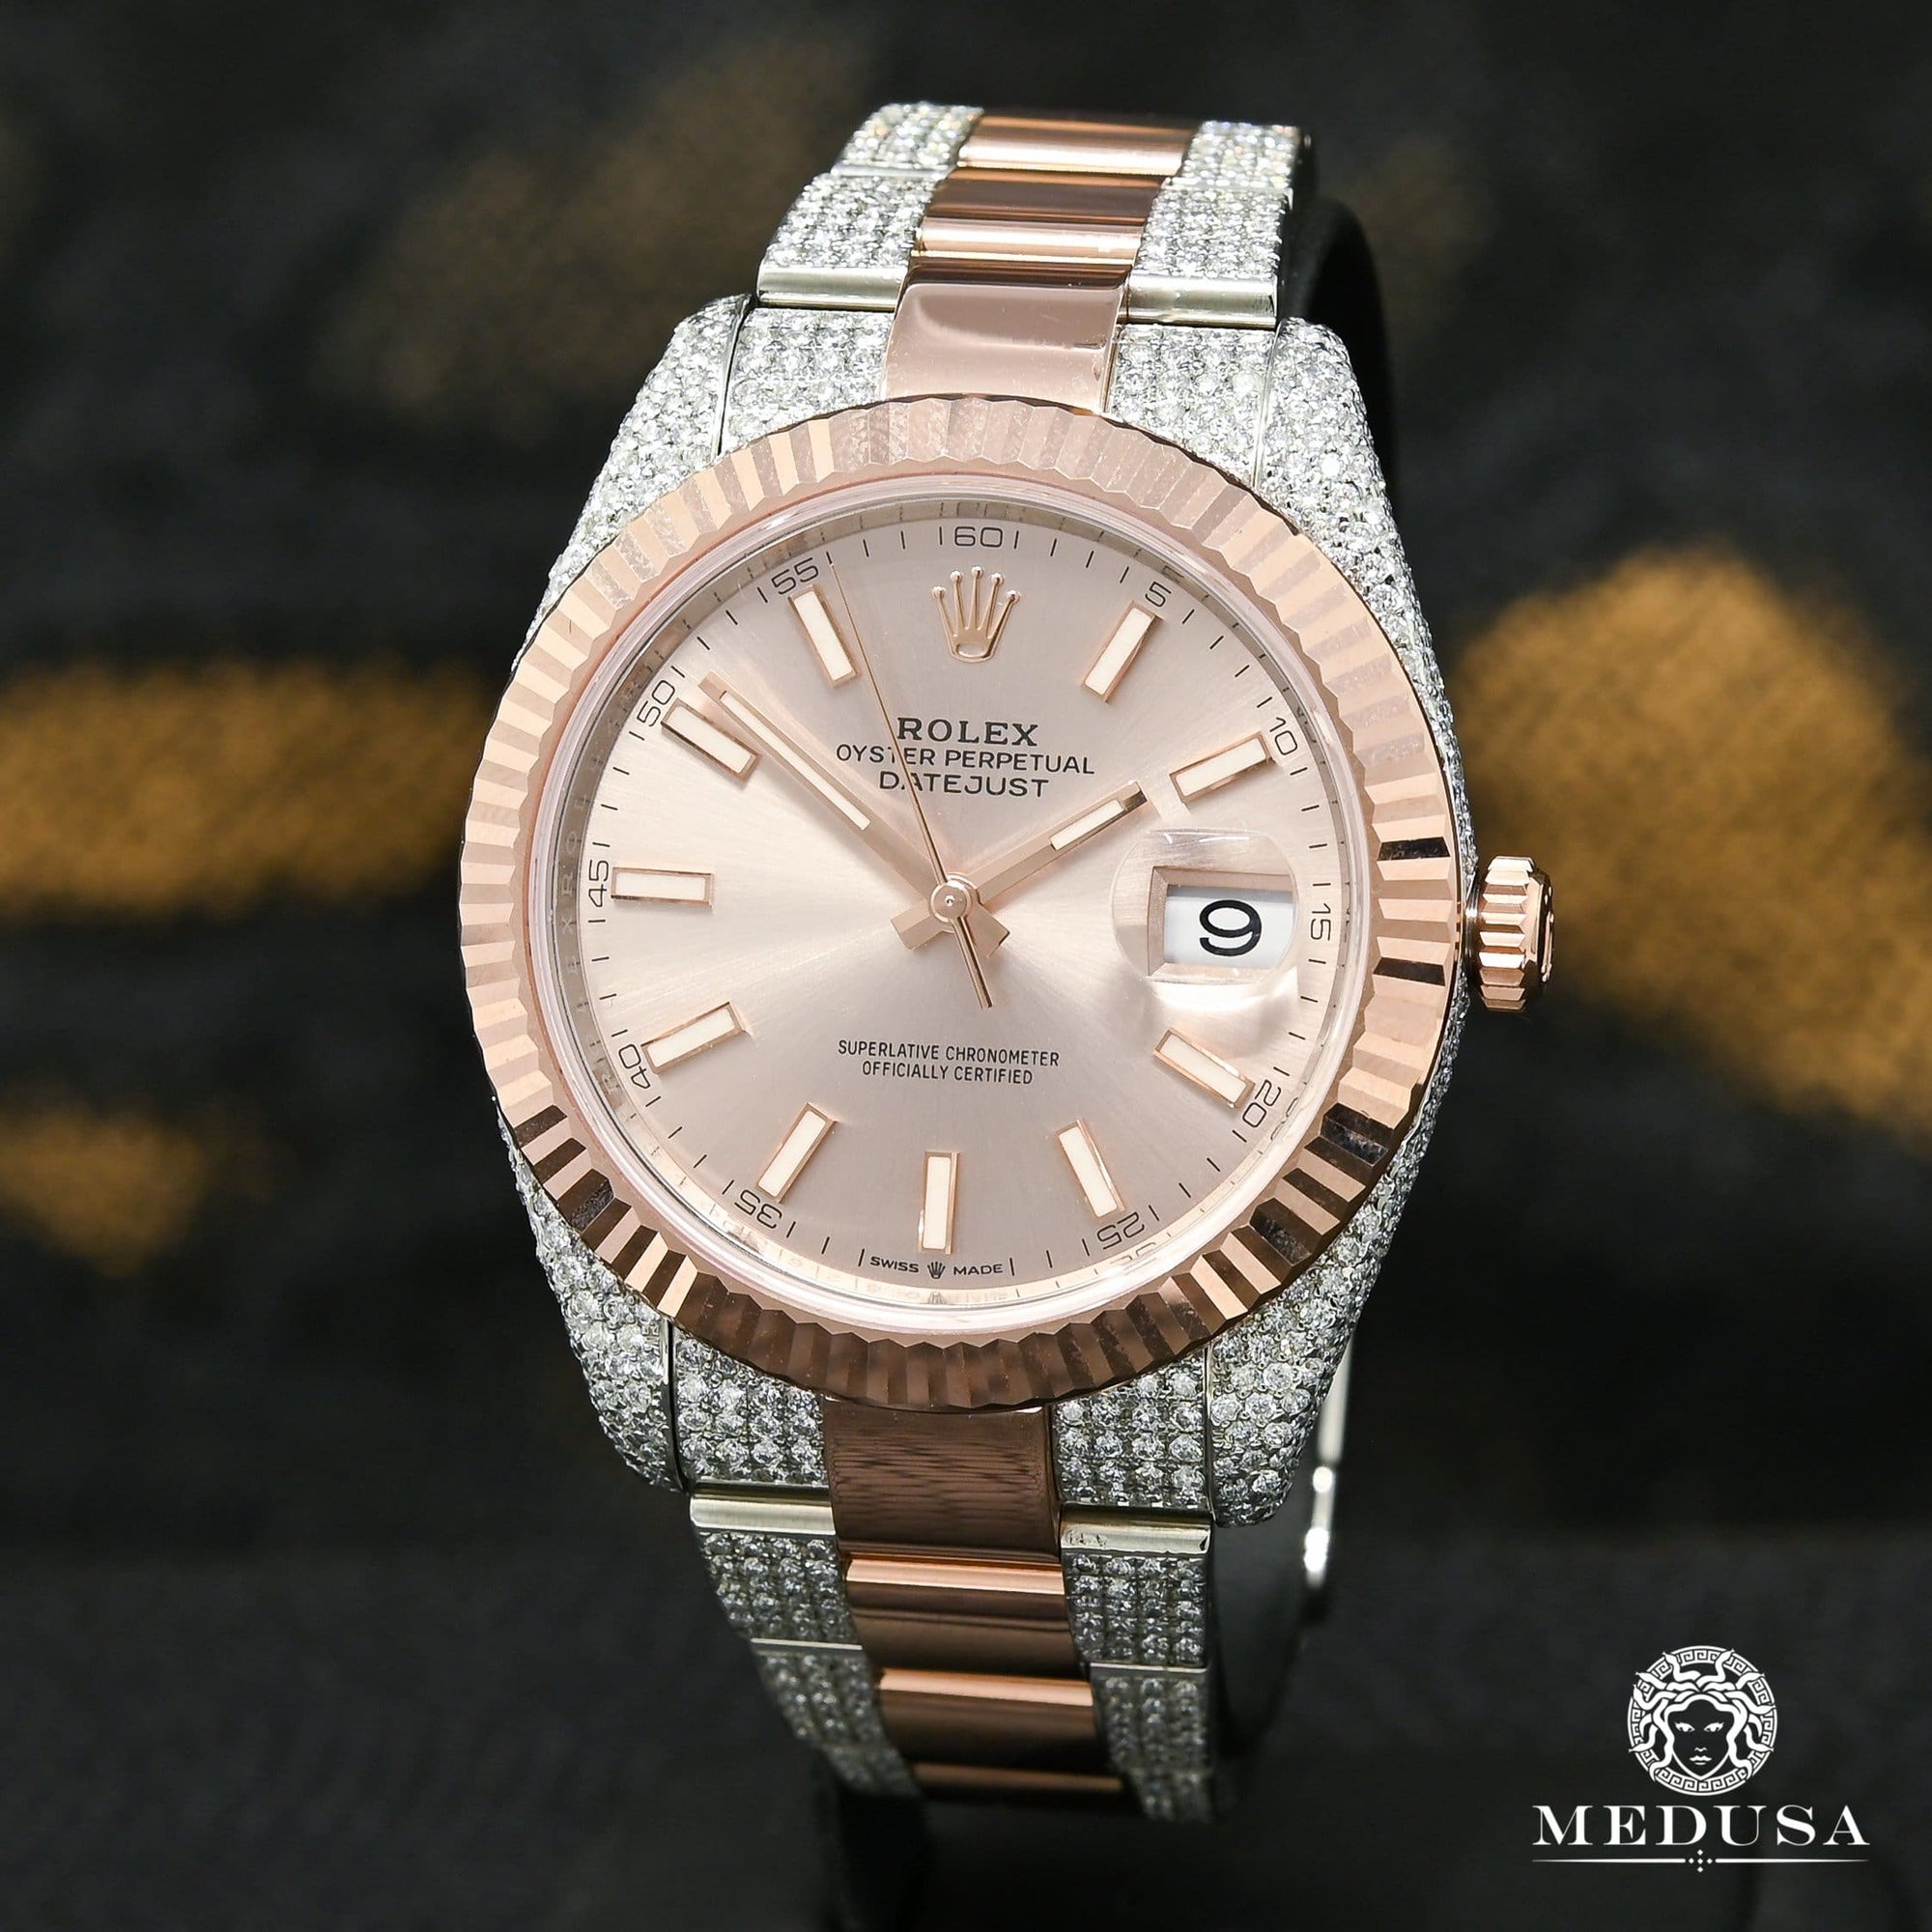 Rolex watch | Rolex Datejust Men's Watch 41mm - Sundust Fluted Everose Iced Rose Gold 2 Tones